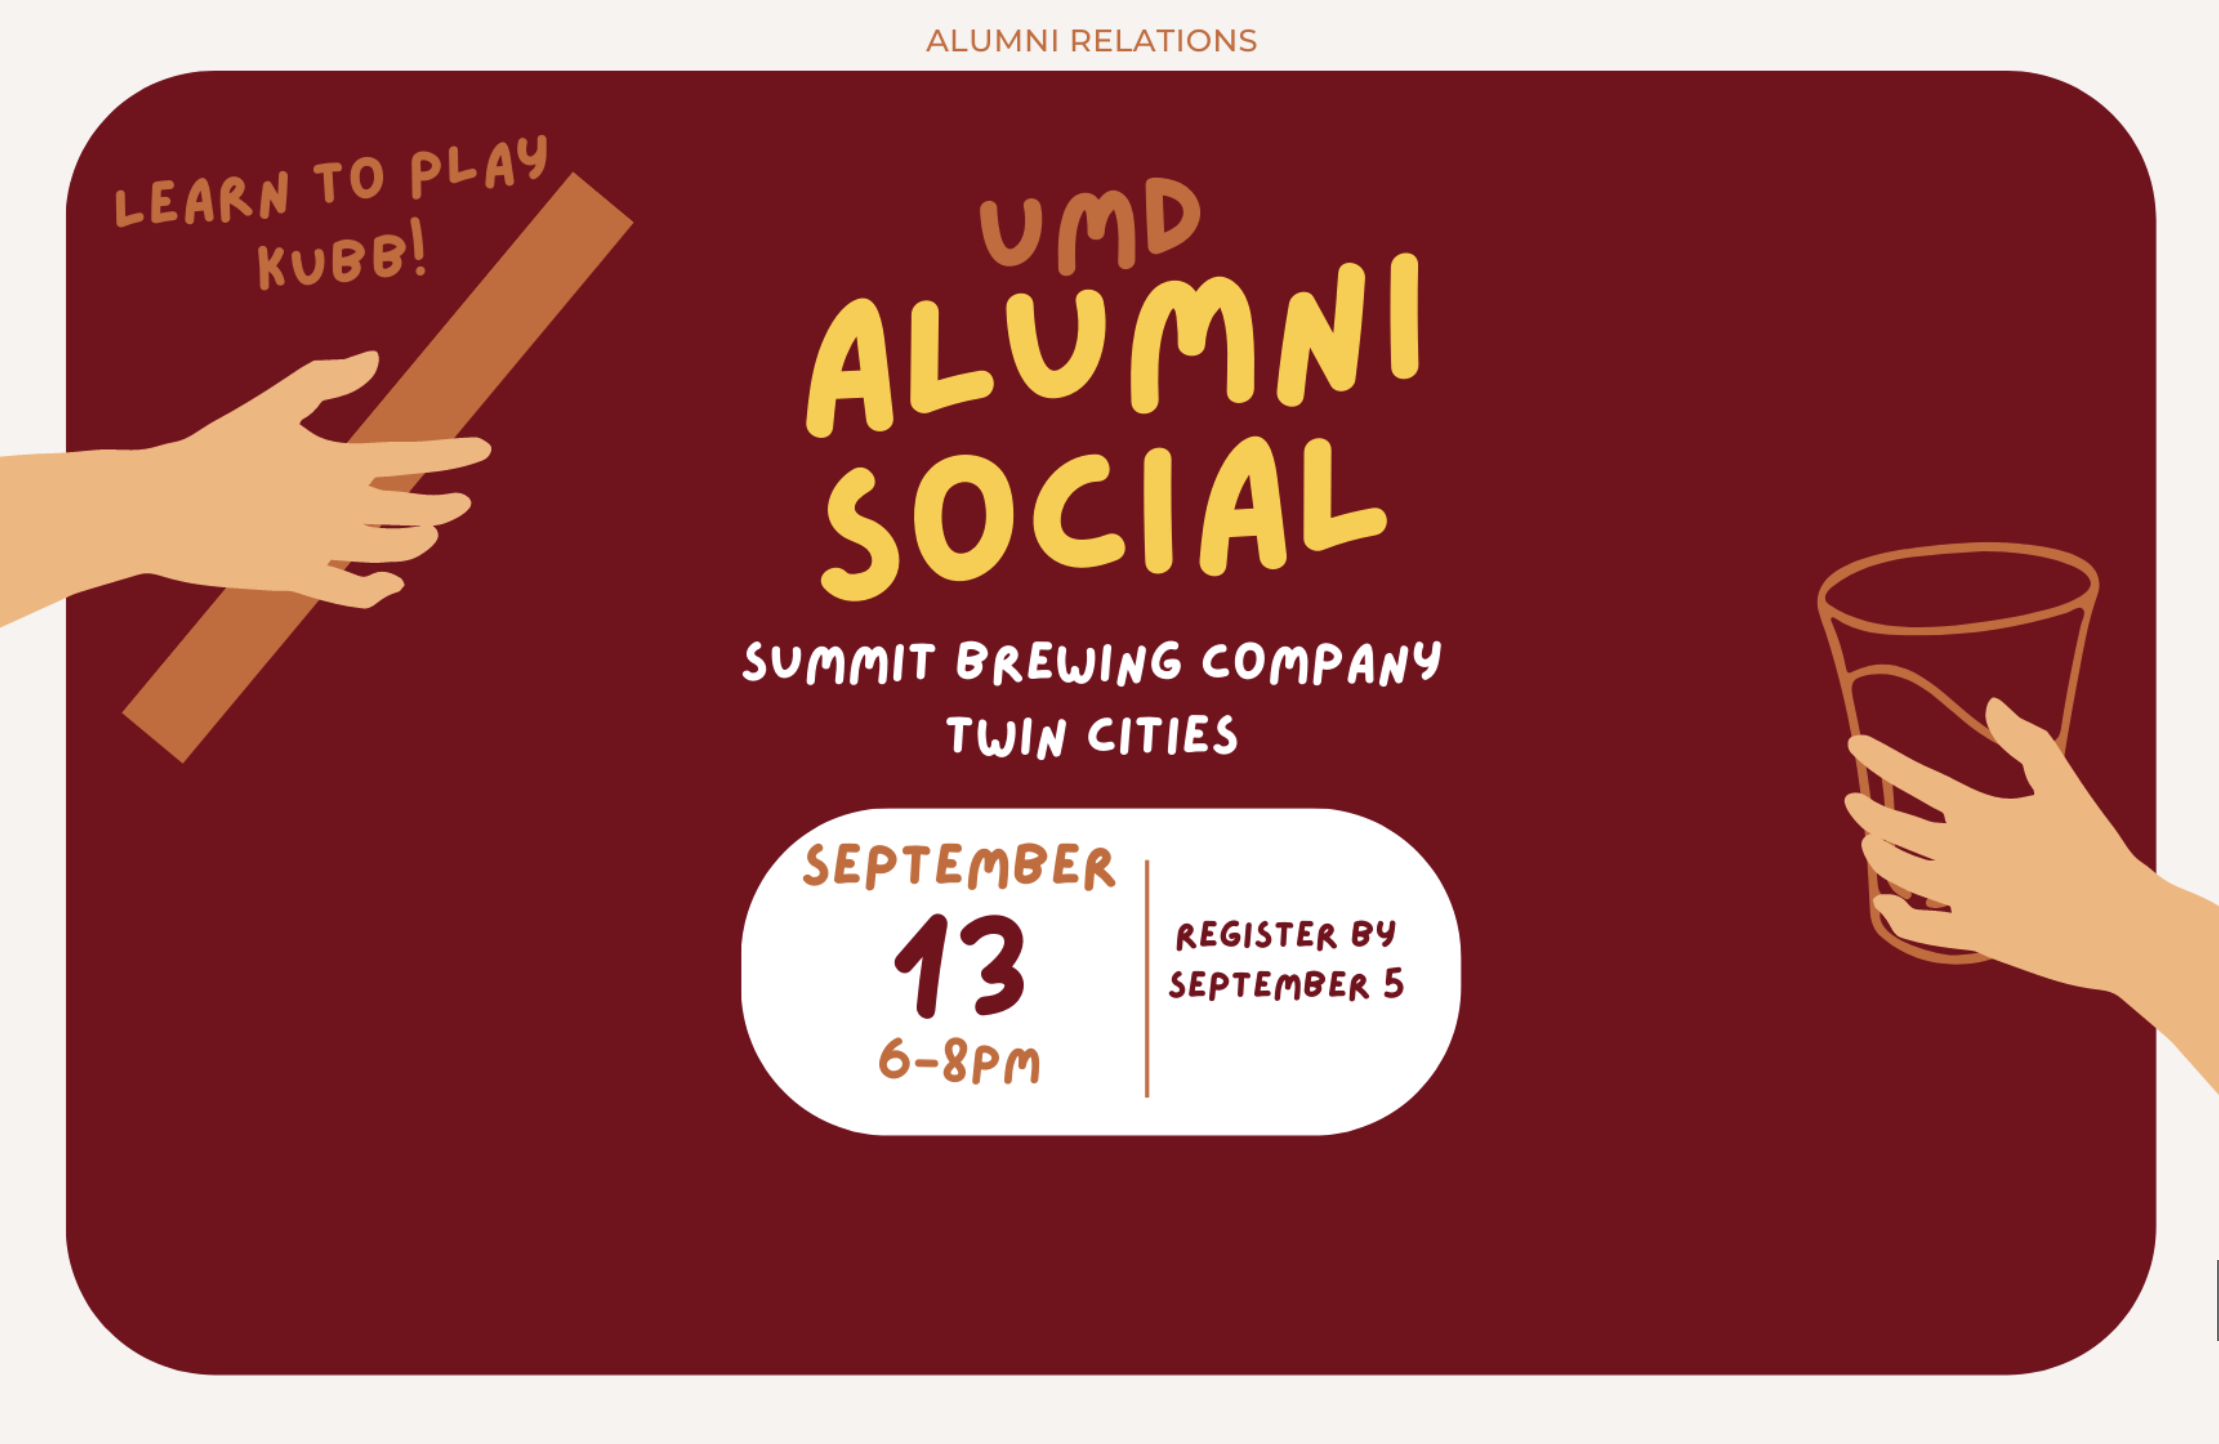 umd alumni social summit brewing company twin cities